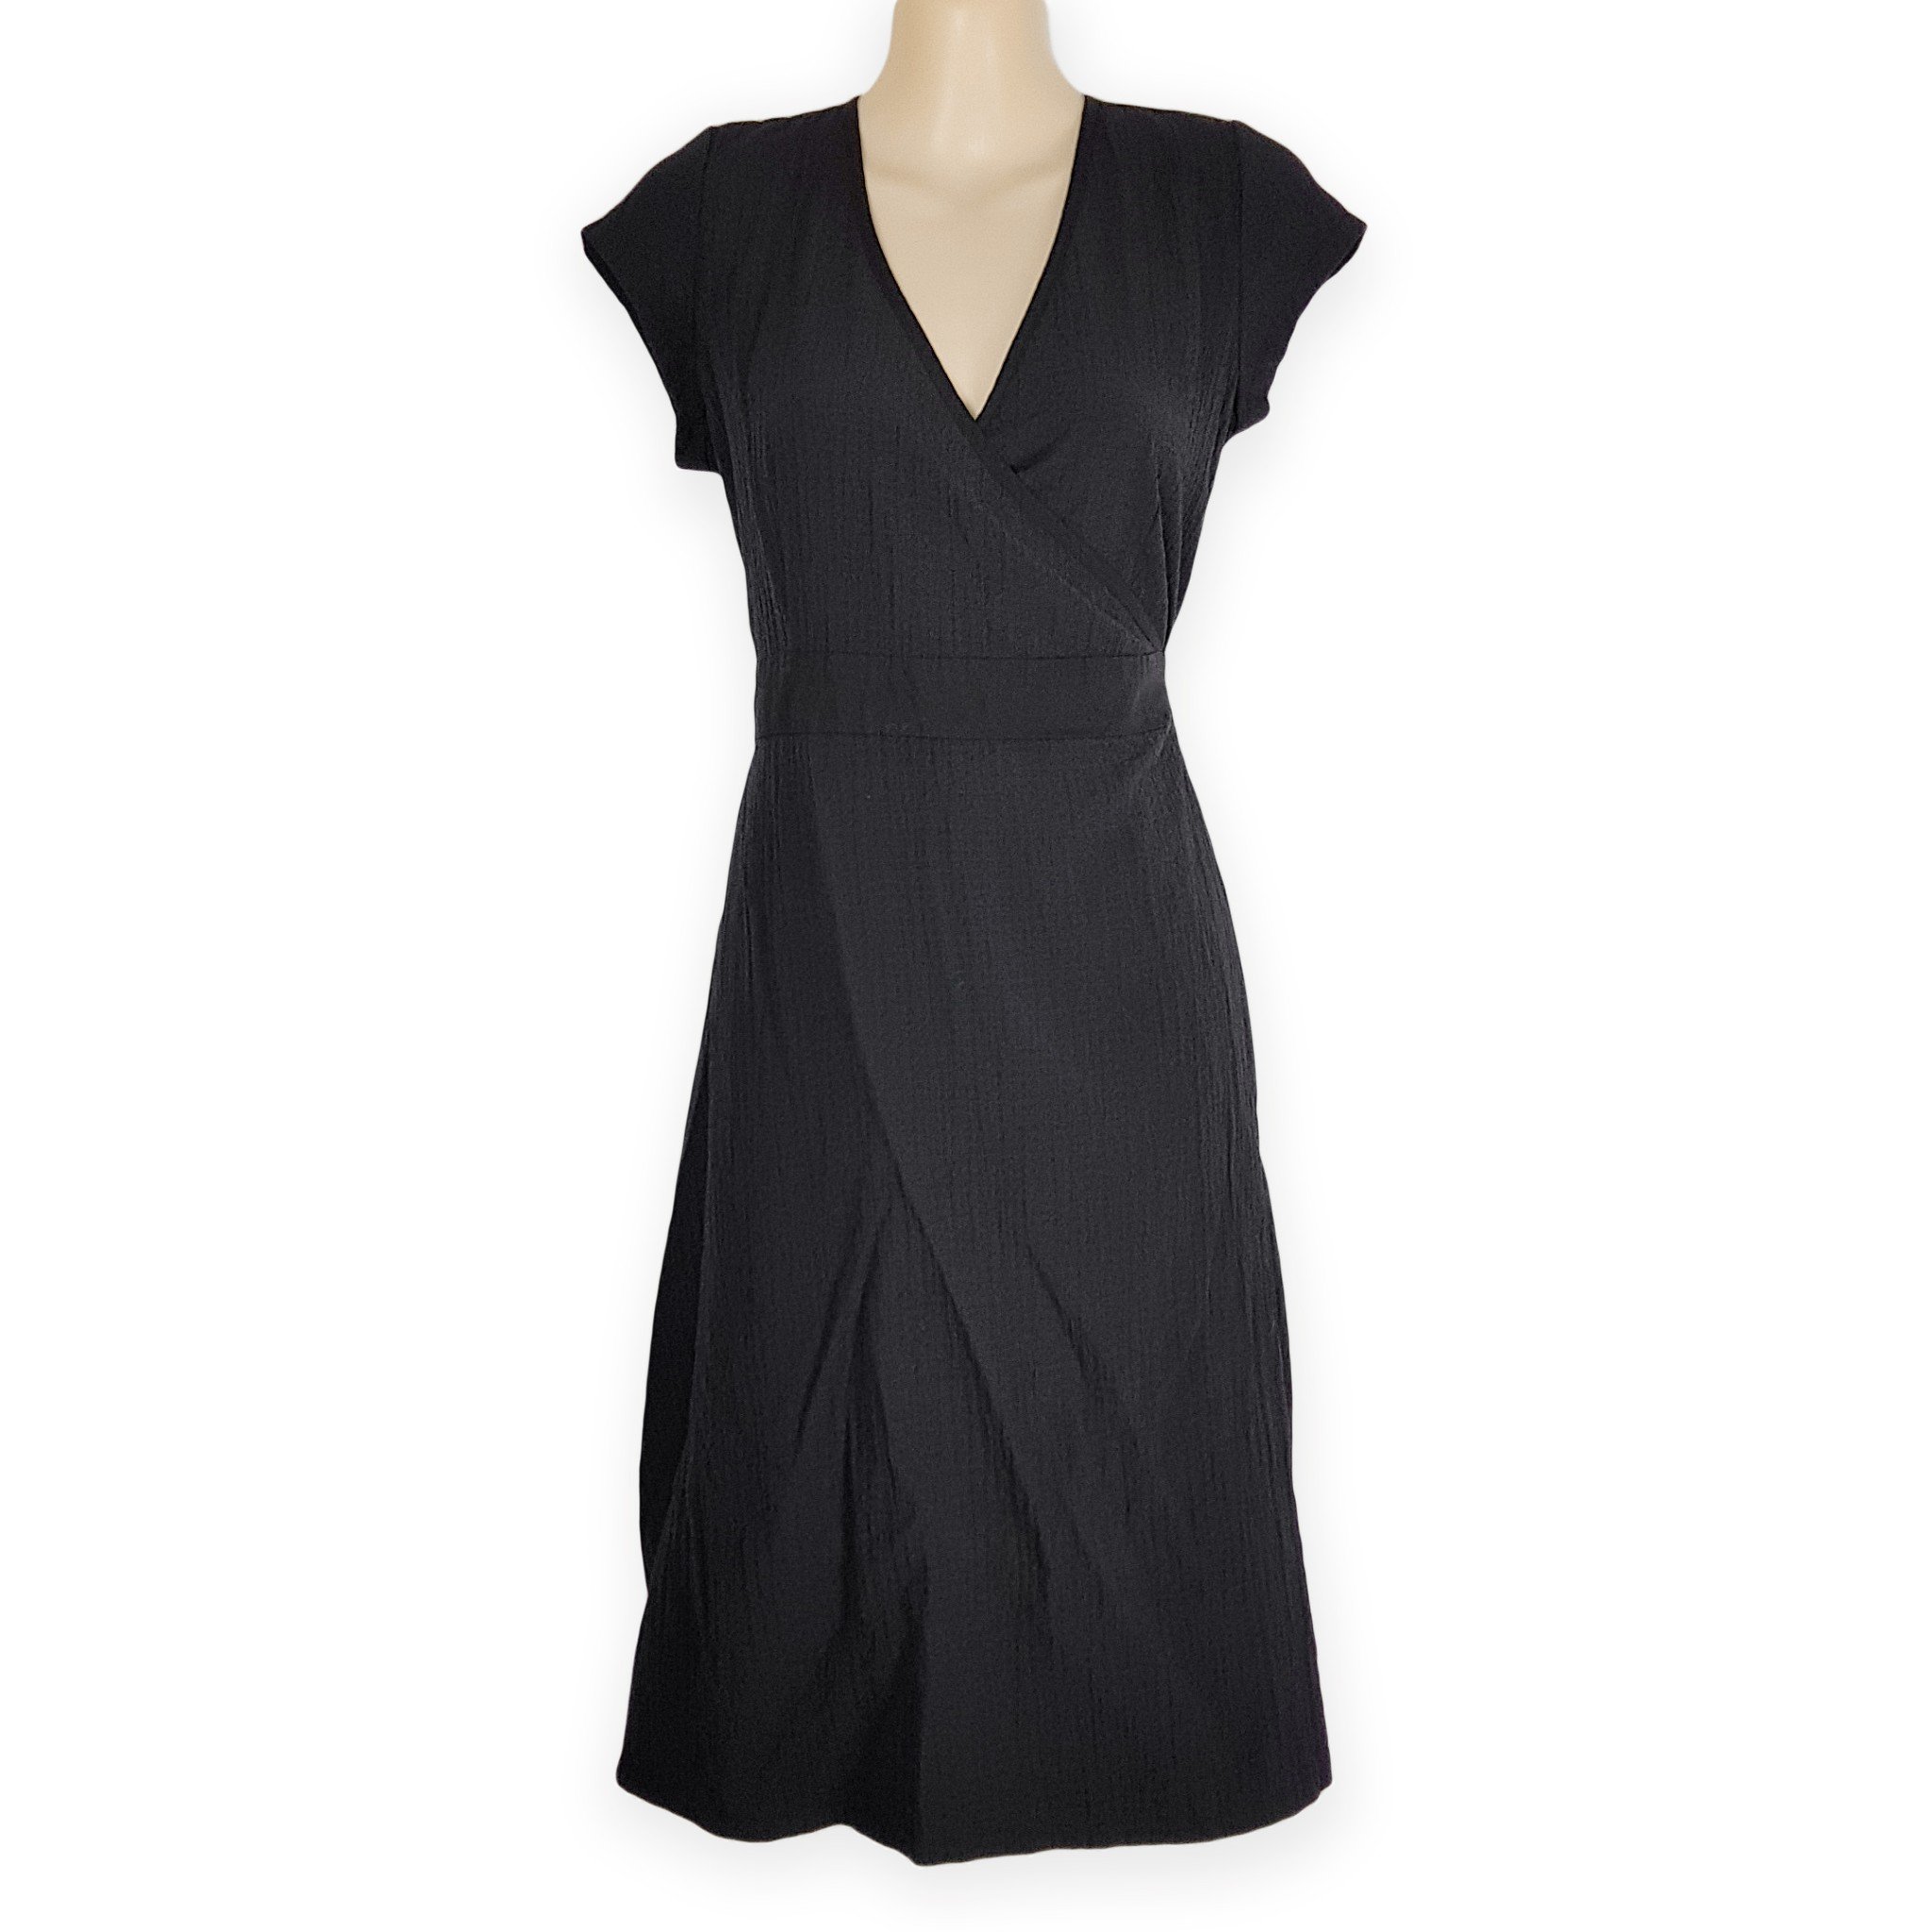 KATHMANDU Black Wrap Dress - Thriftd Australia